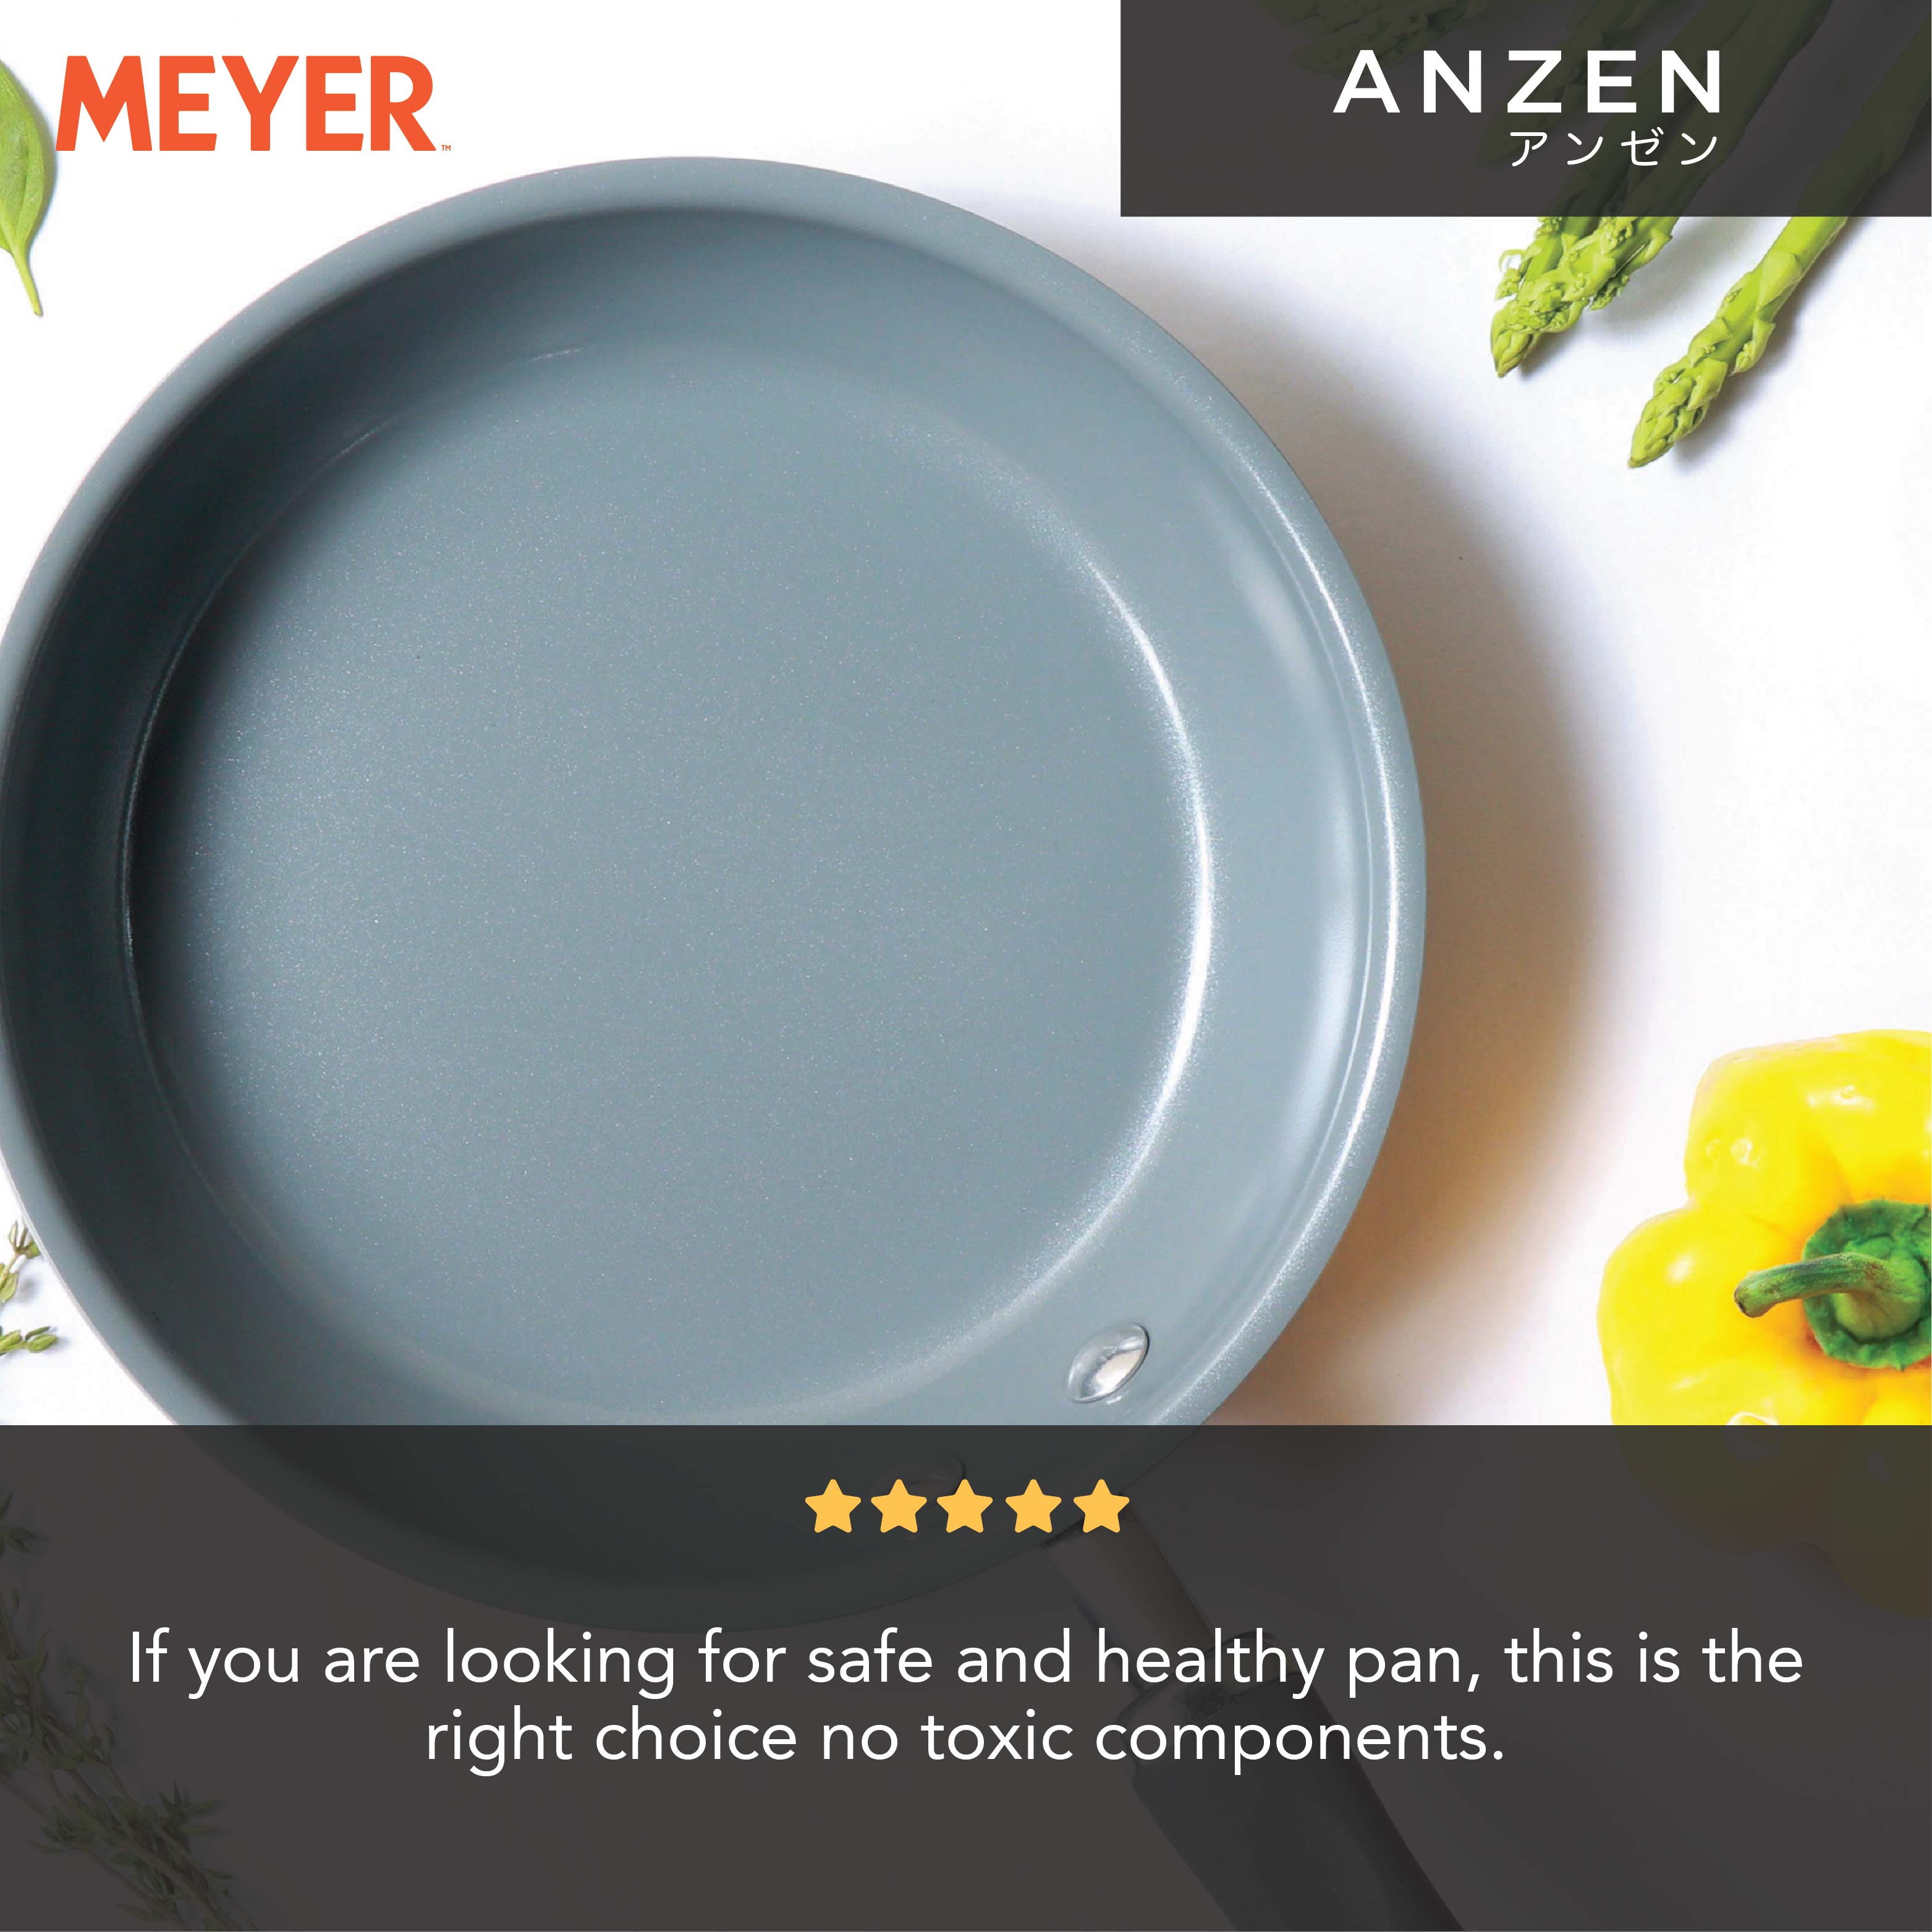 Meyer Anzen Ceramic Coated Cookware 2 piece Set -20cm frypan +24cm frypan